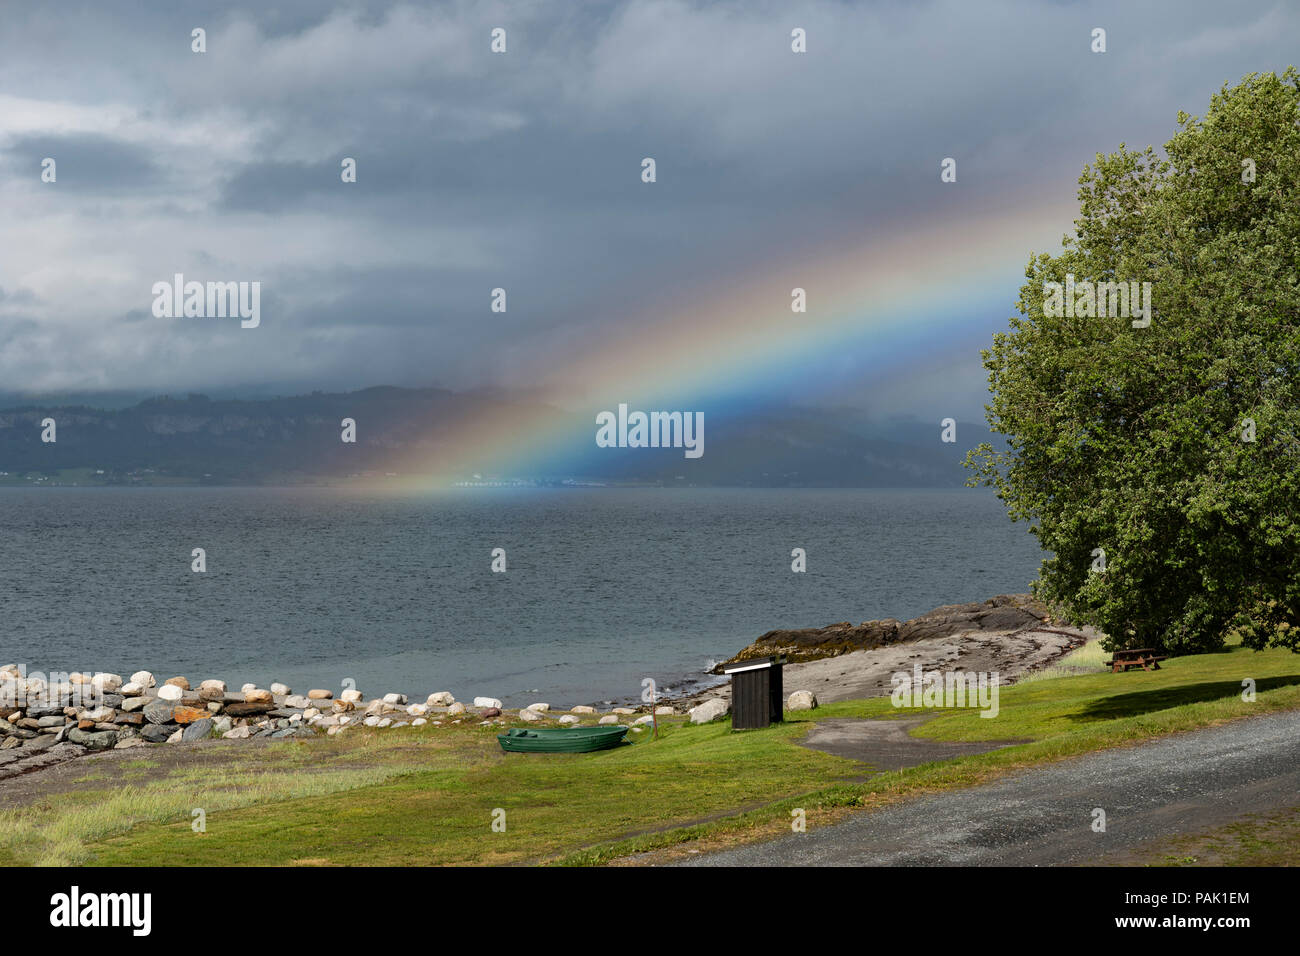 Rainbow over Tromdheimsfjorden, Norway Stock Photo